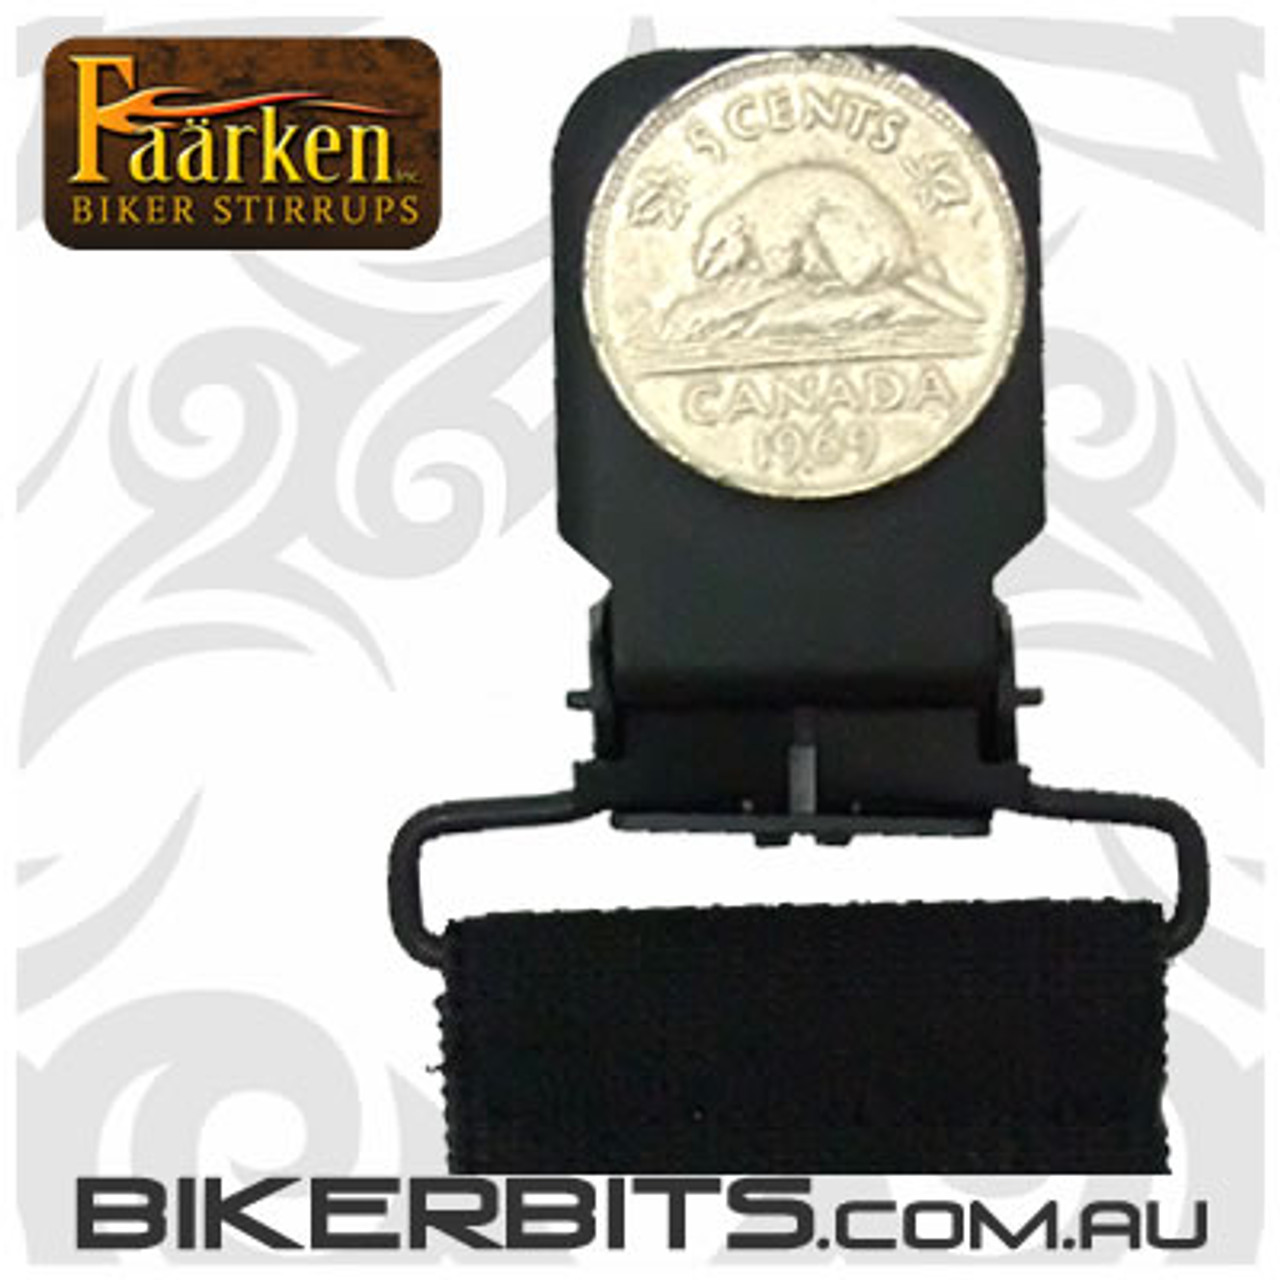 Faarken Biker Stirrups - 69 Beaver Nickel